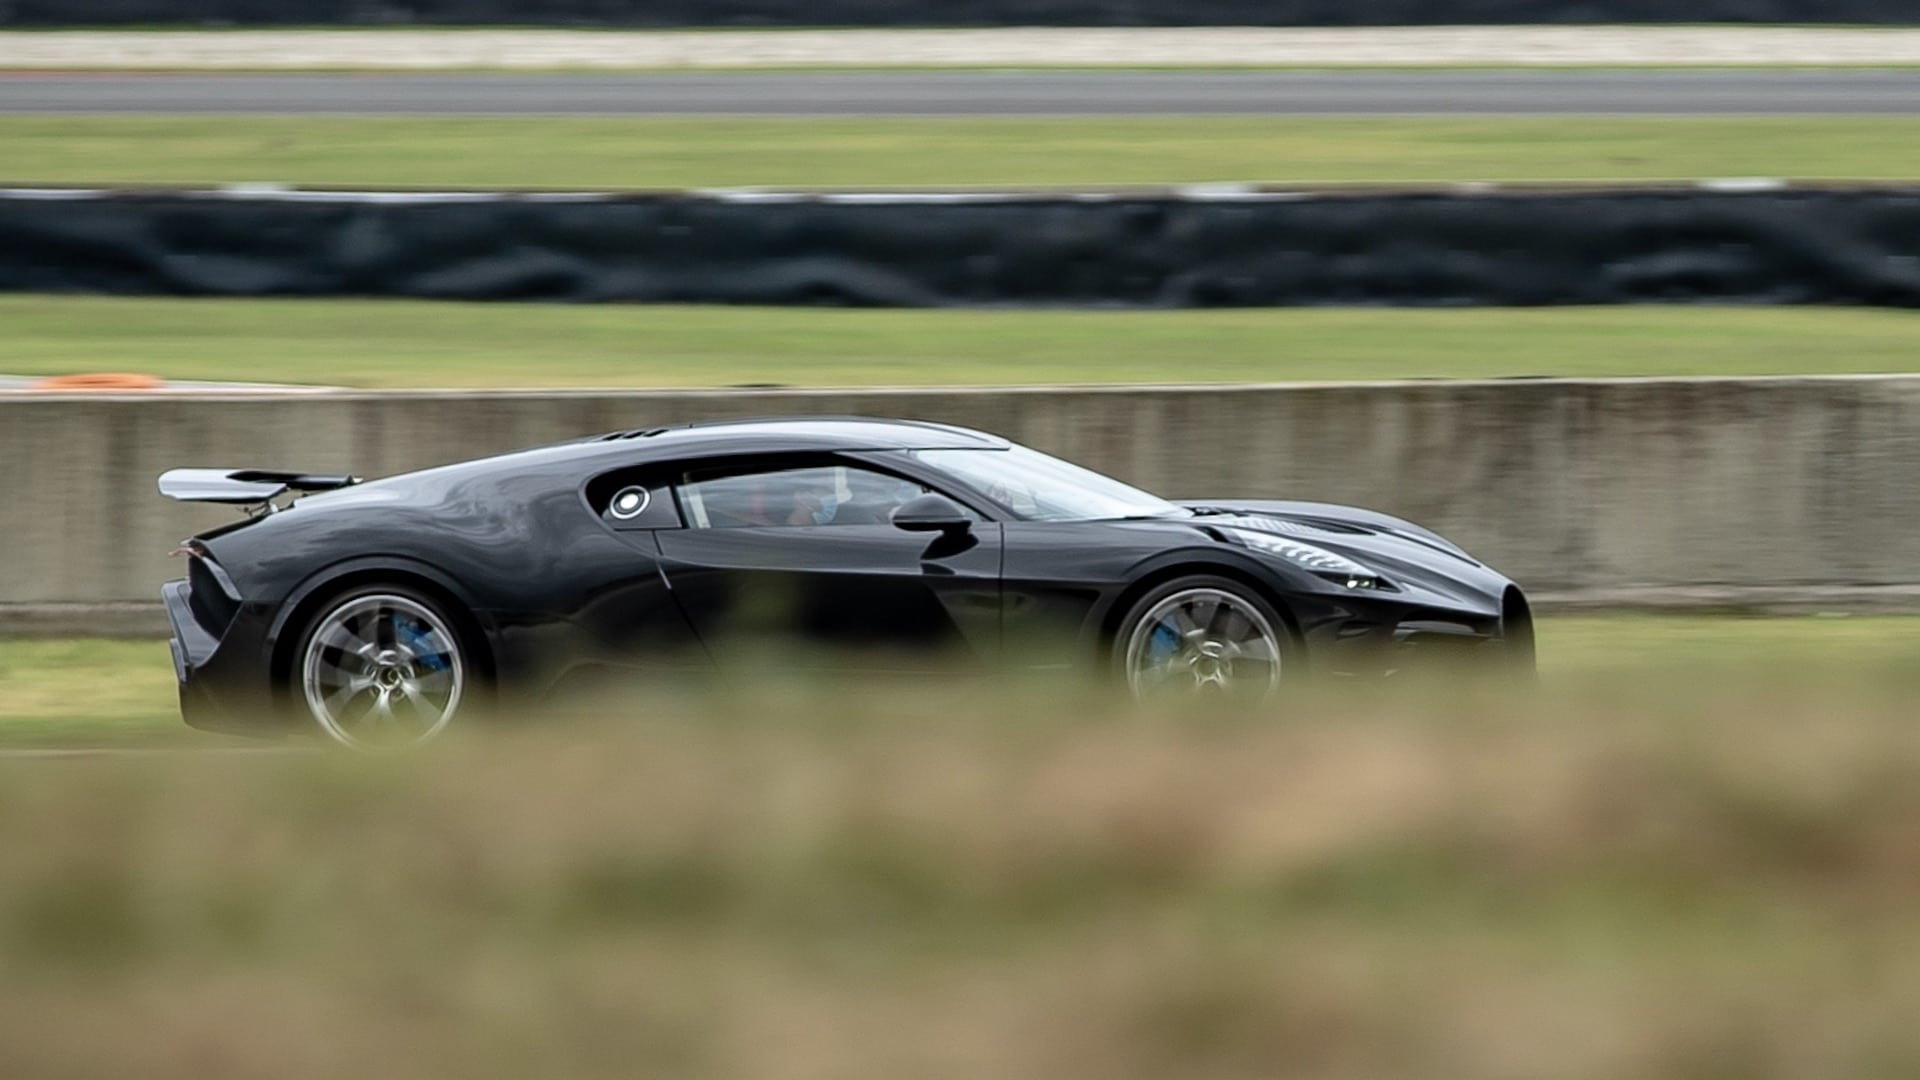 Bugatti The Black Car 2021